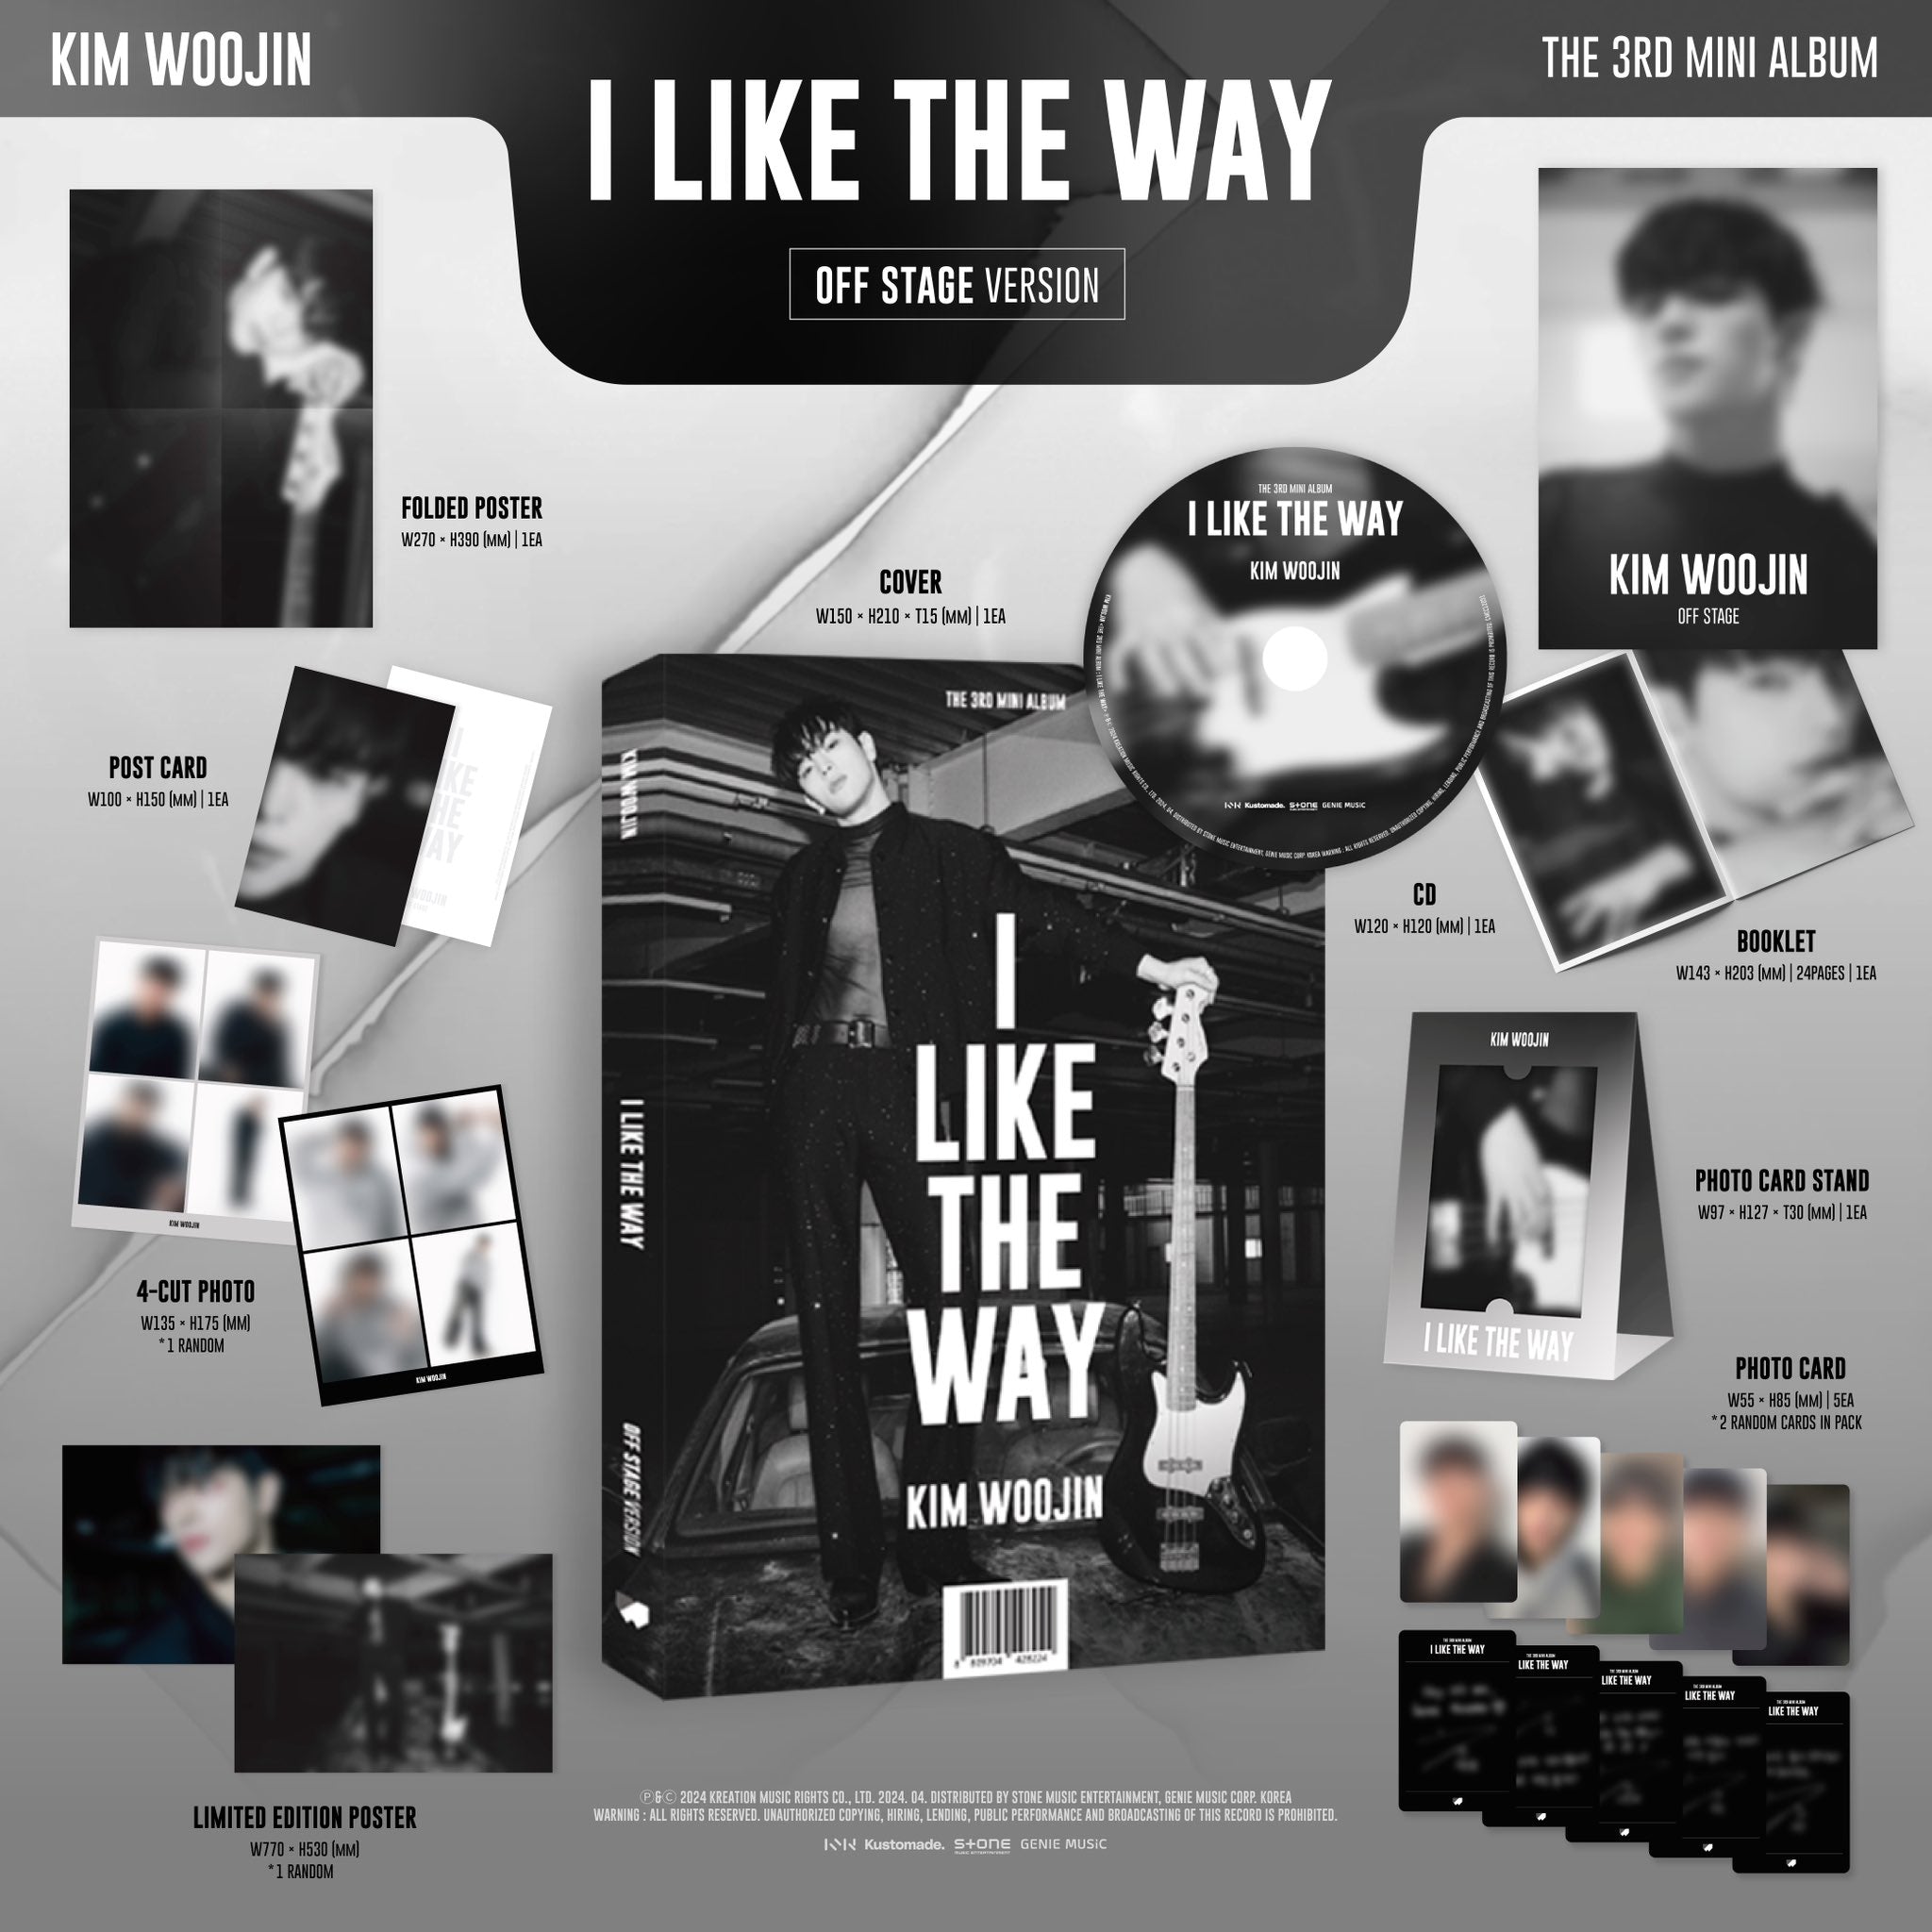 Kim Woojin 3rd Mini Album "I LIKE THE WAY"